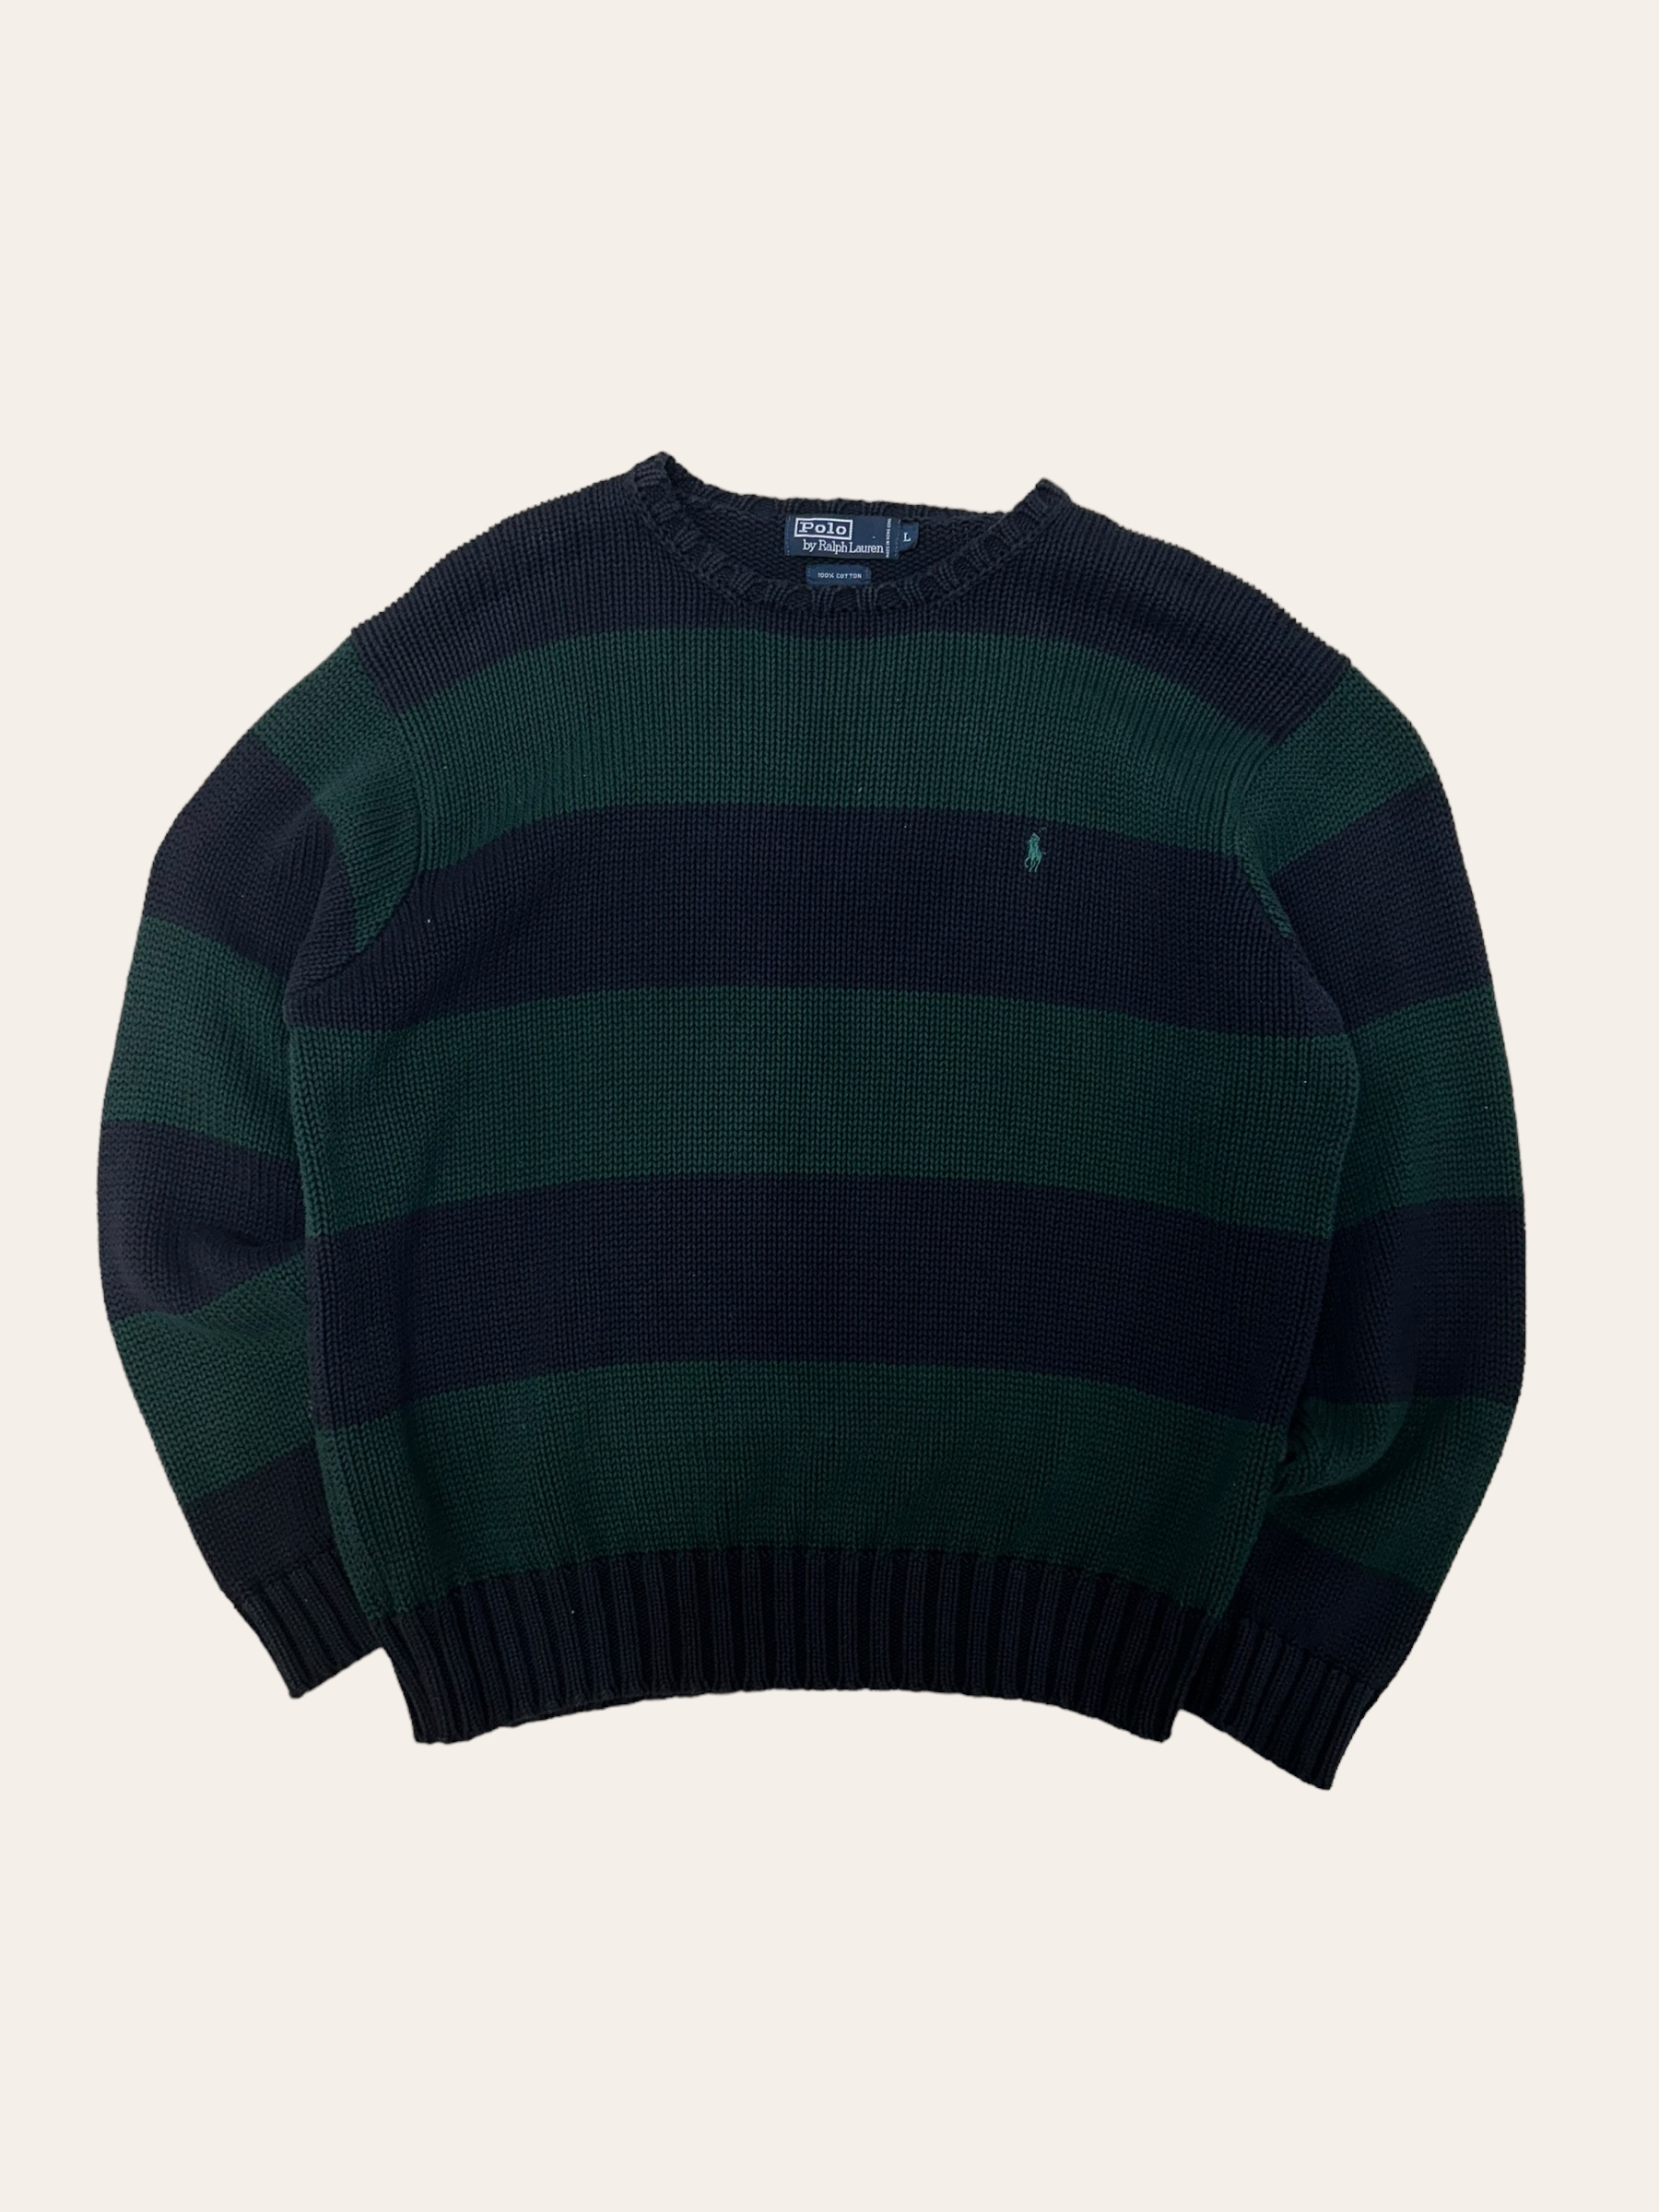 Polo ralph lauren green/navy stripe cotton sweater L